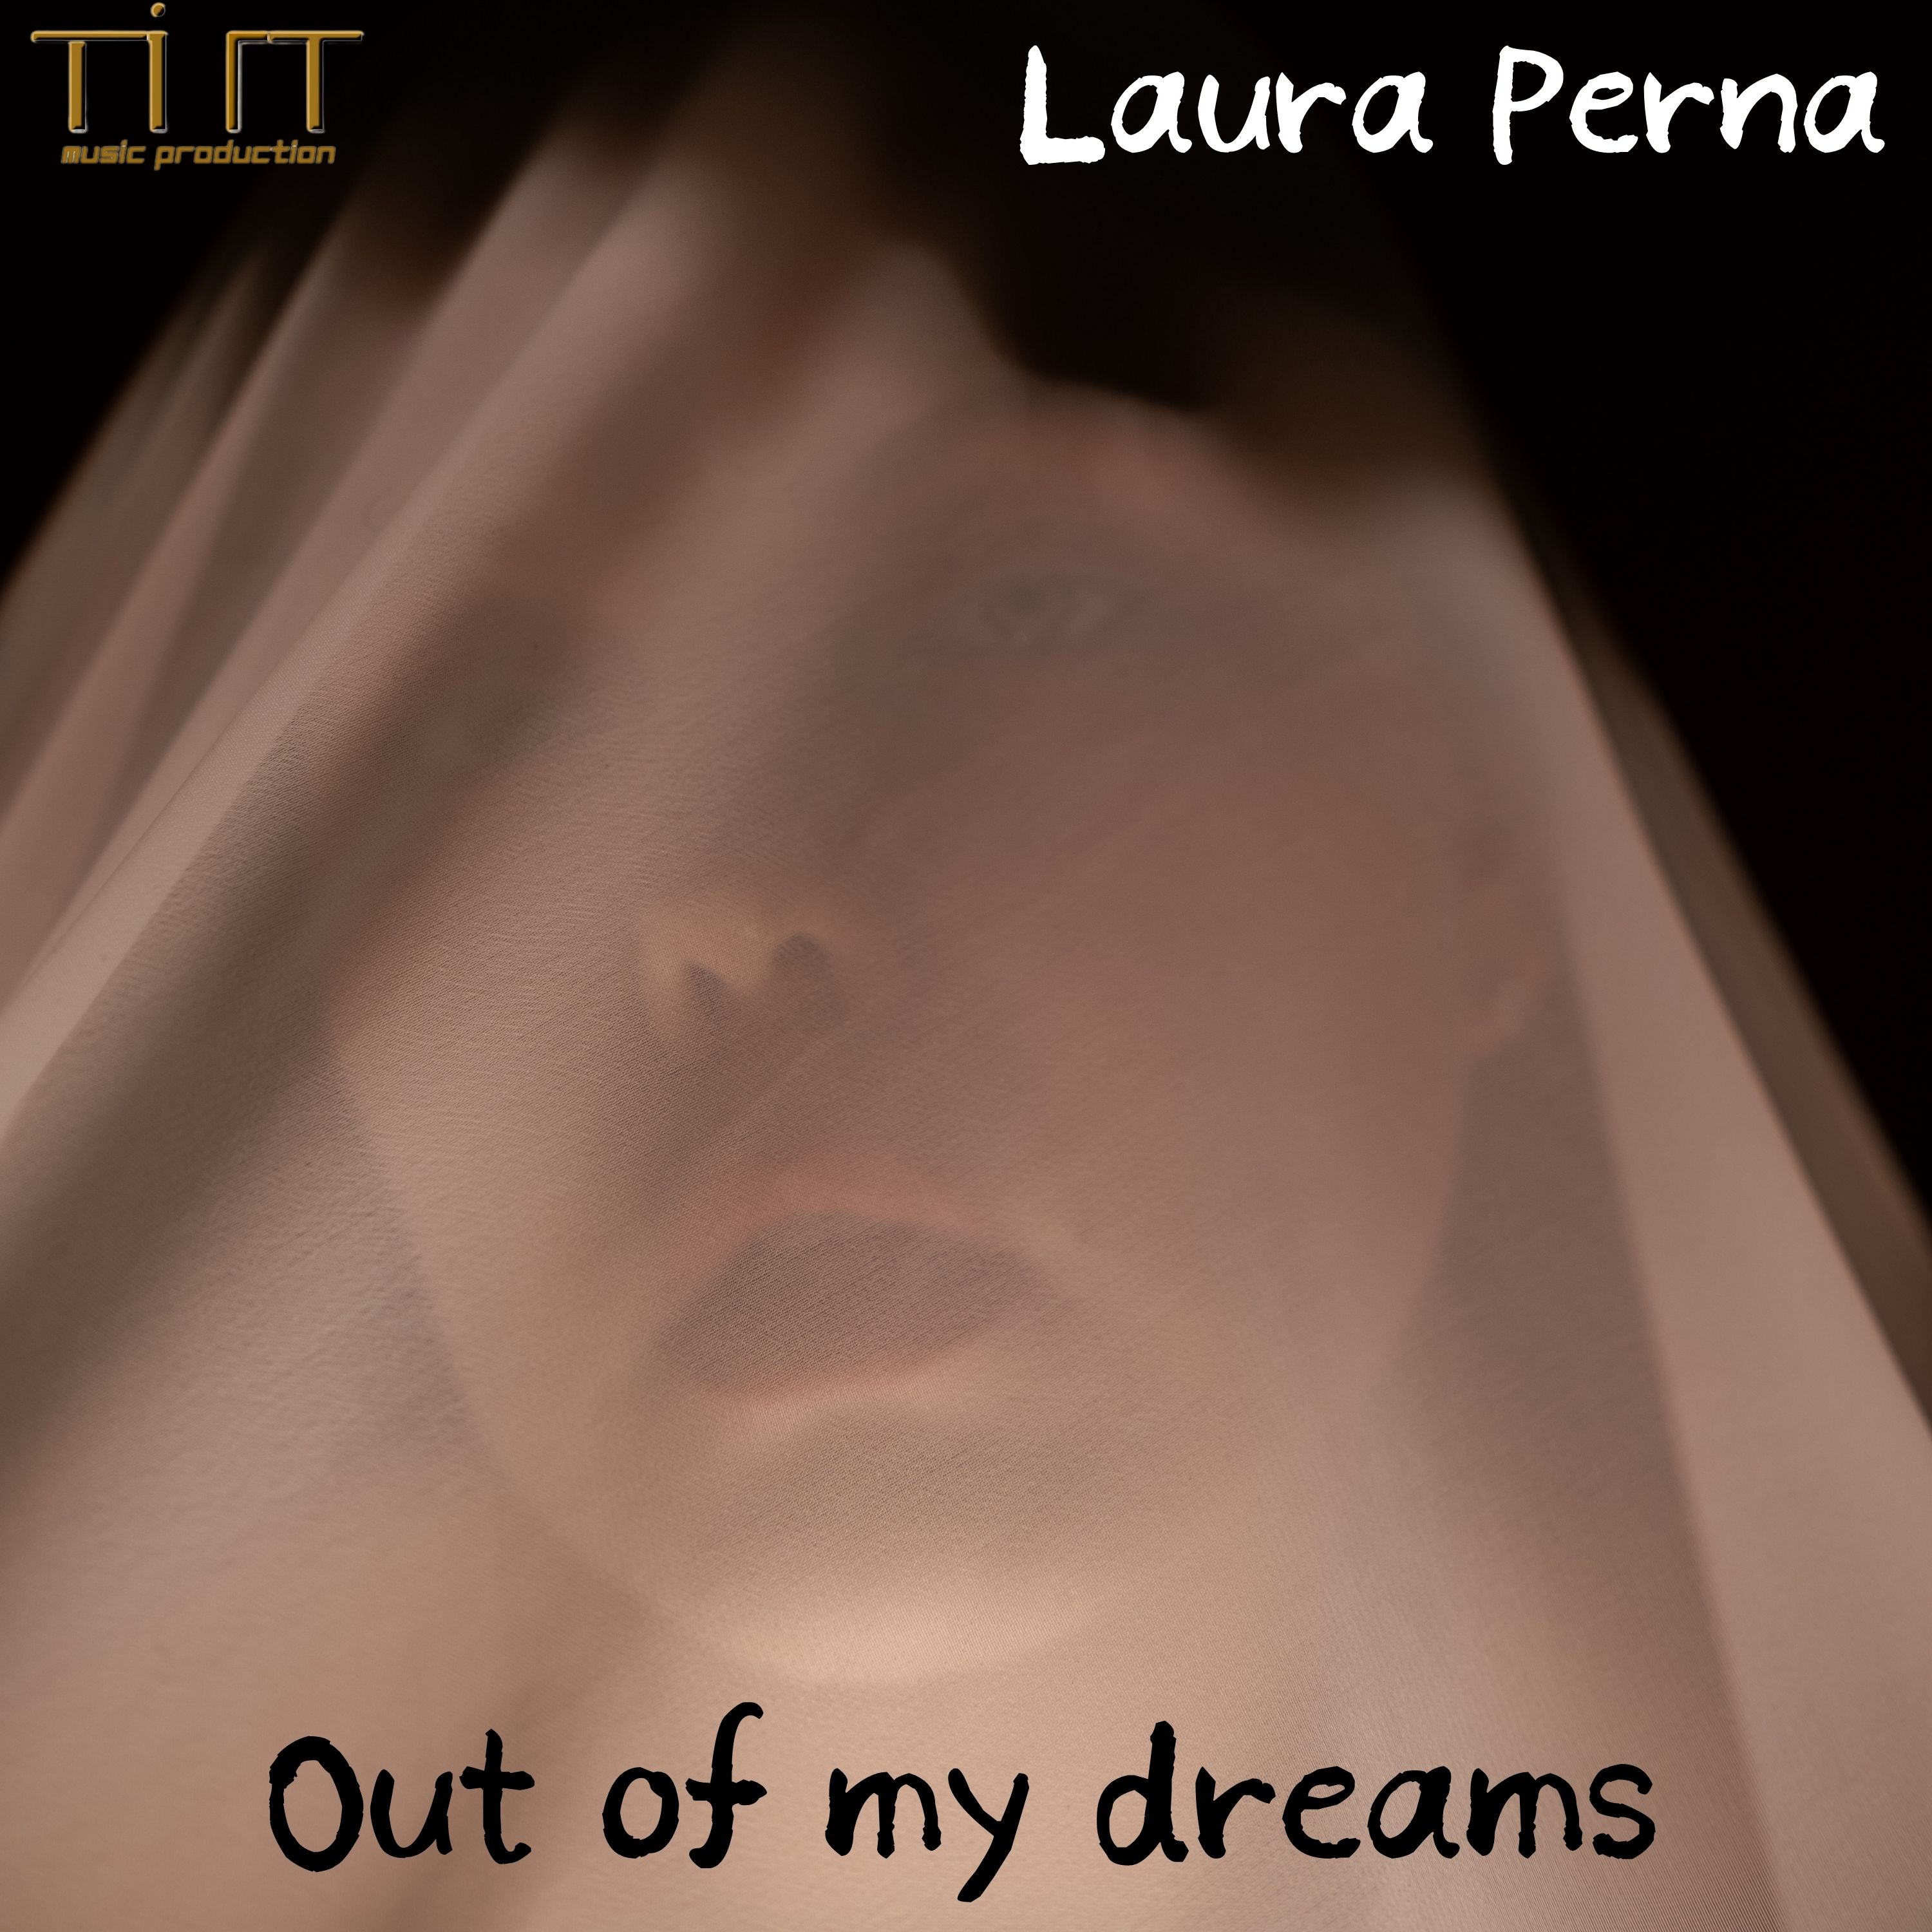 Nuovo singolo per Laura Perna: Out Of My Dreams!